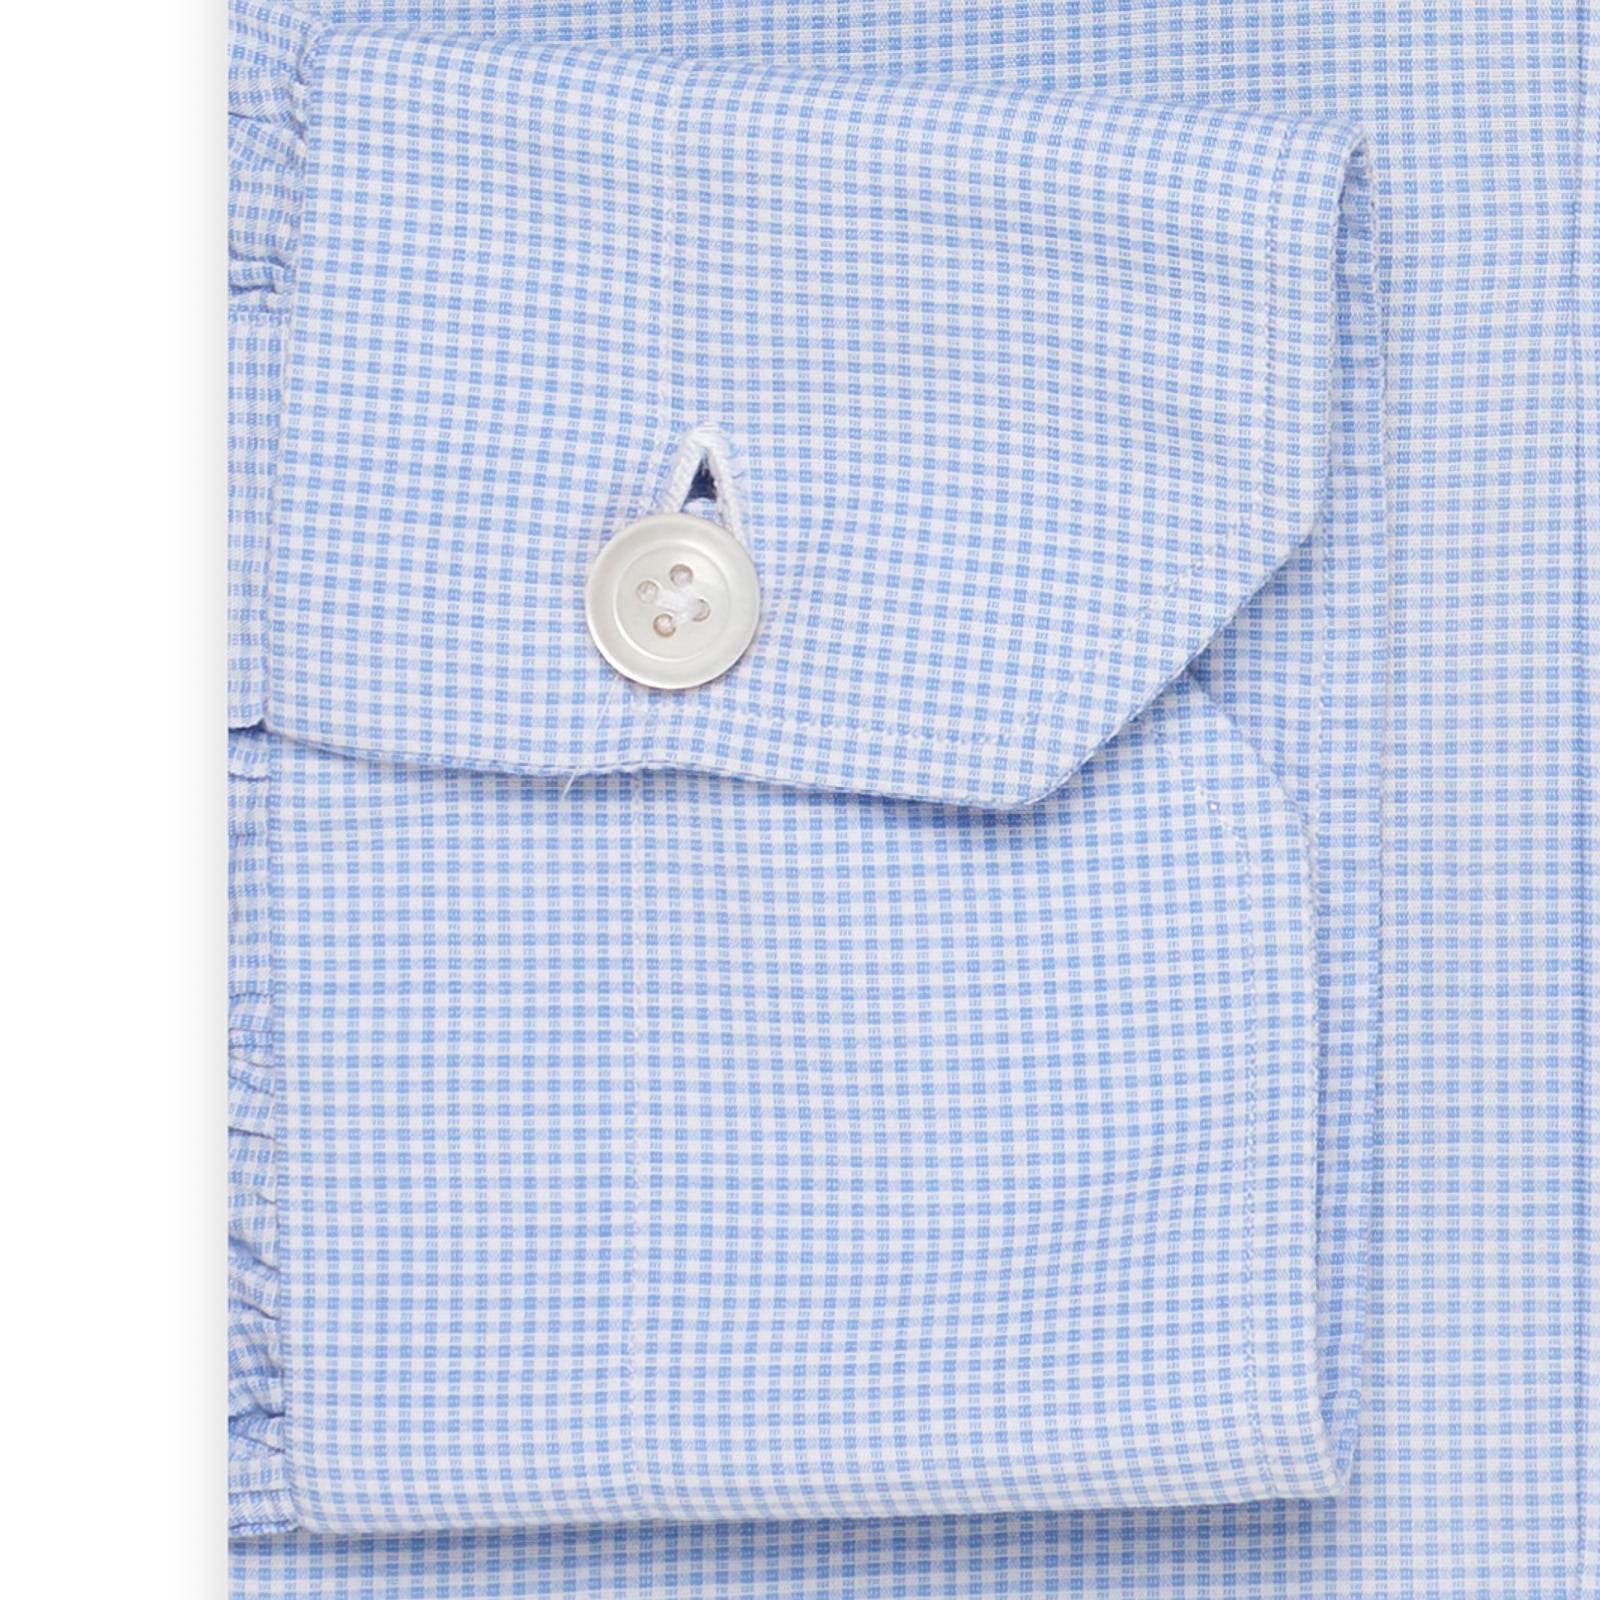 KITON Napoli Handmade Blue Checkered Poplin Cotton Dress Shirt EU 39 US 15.5 NEW KITON